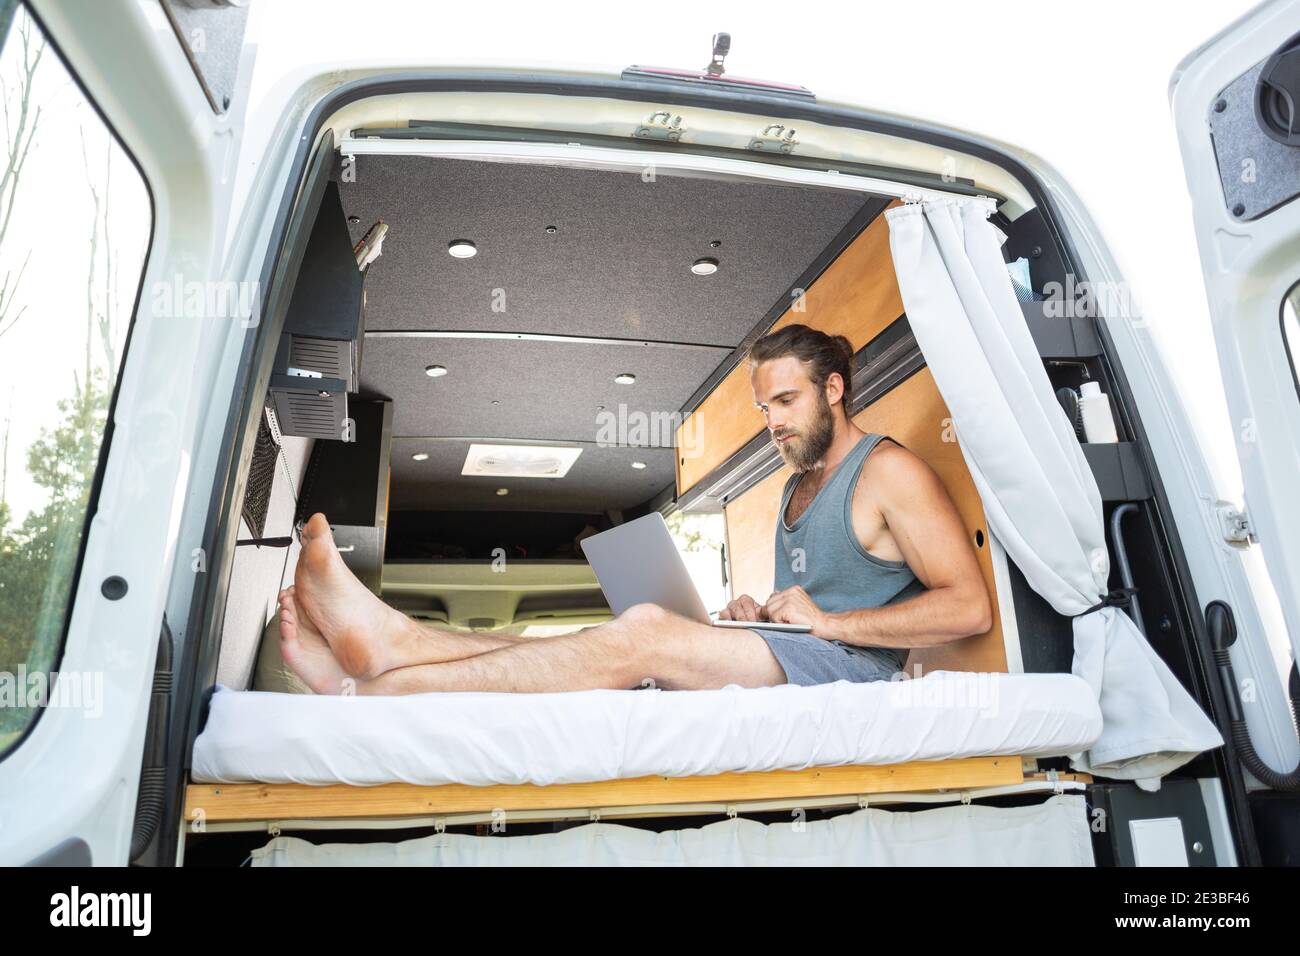 El hombre que se relaja dentro de su furgoneta usa un ordenador portátil Foto de stock